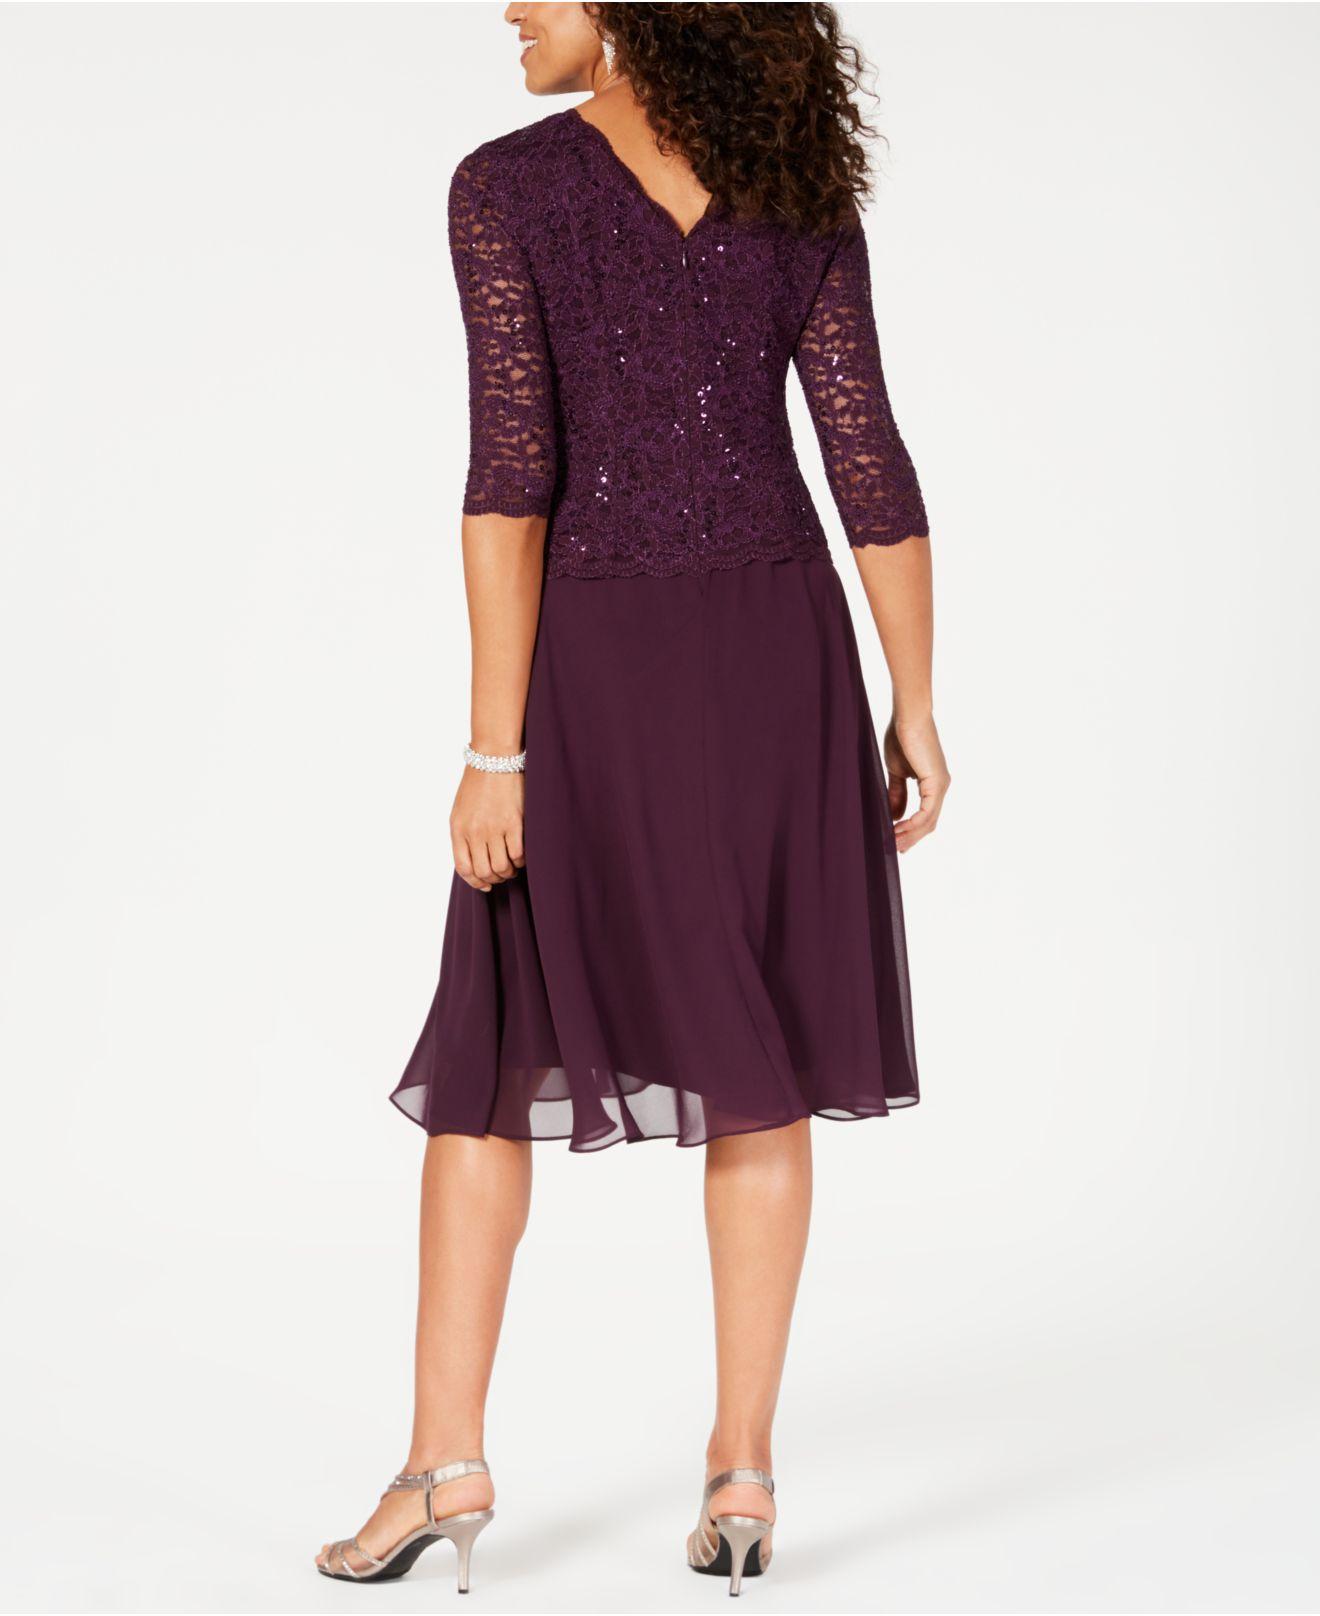 Alex Evenings Sequined Lace Contrast Dress in Deep Plum (Purple) - Lyst